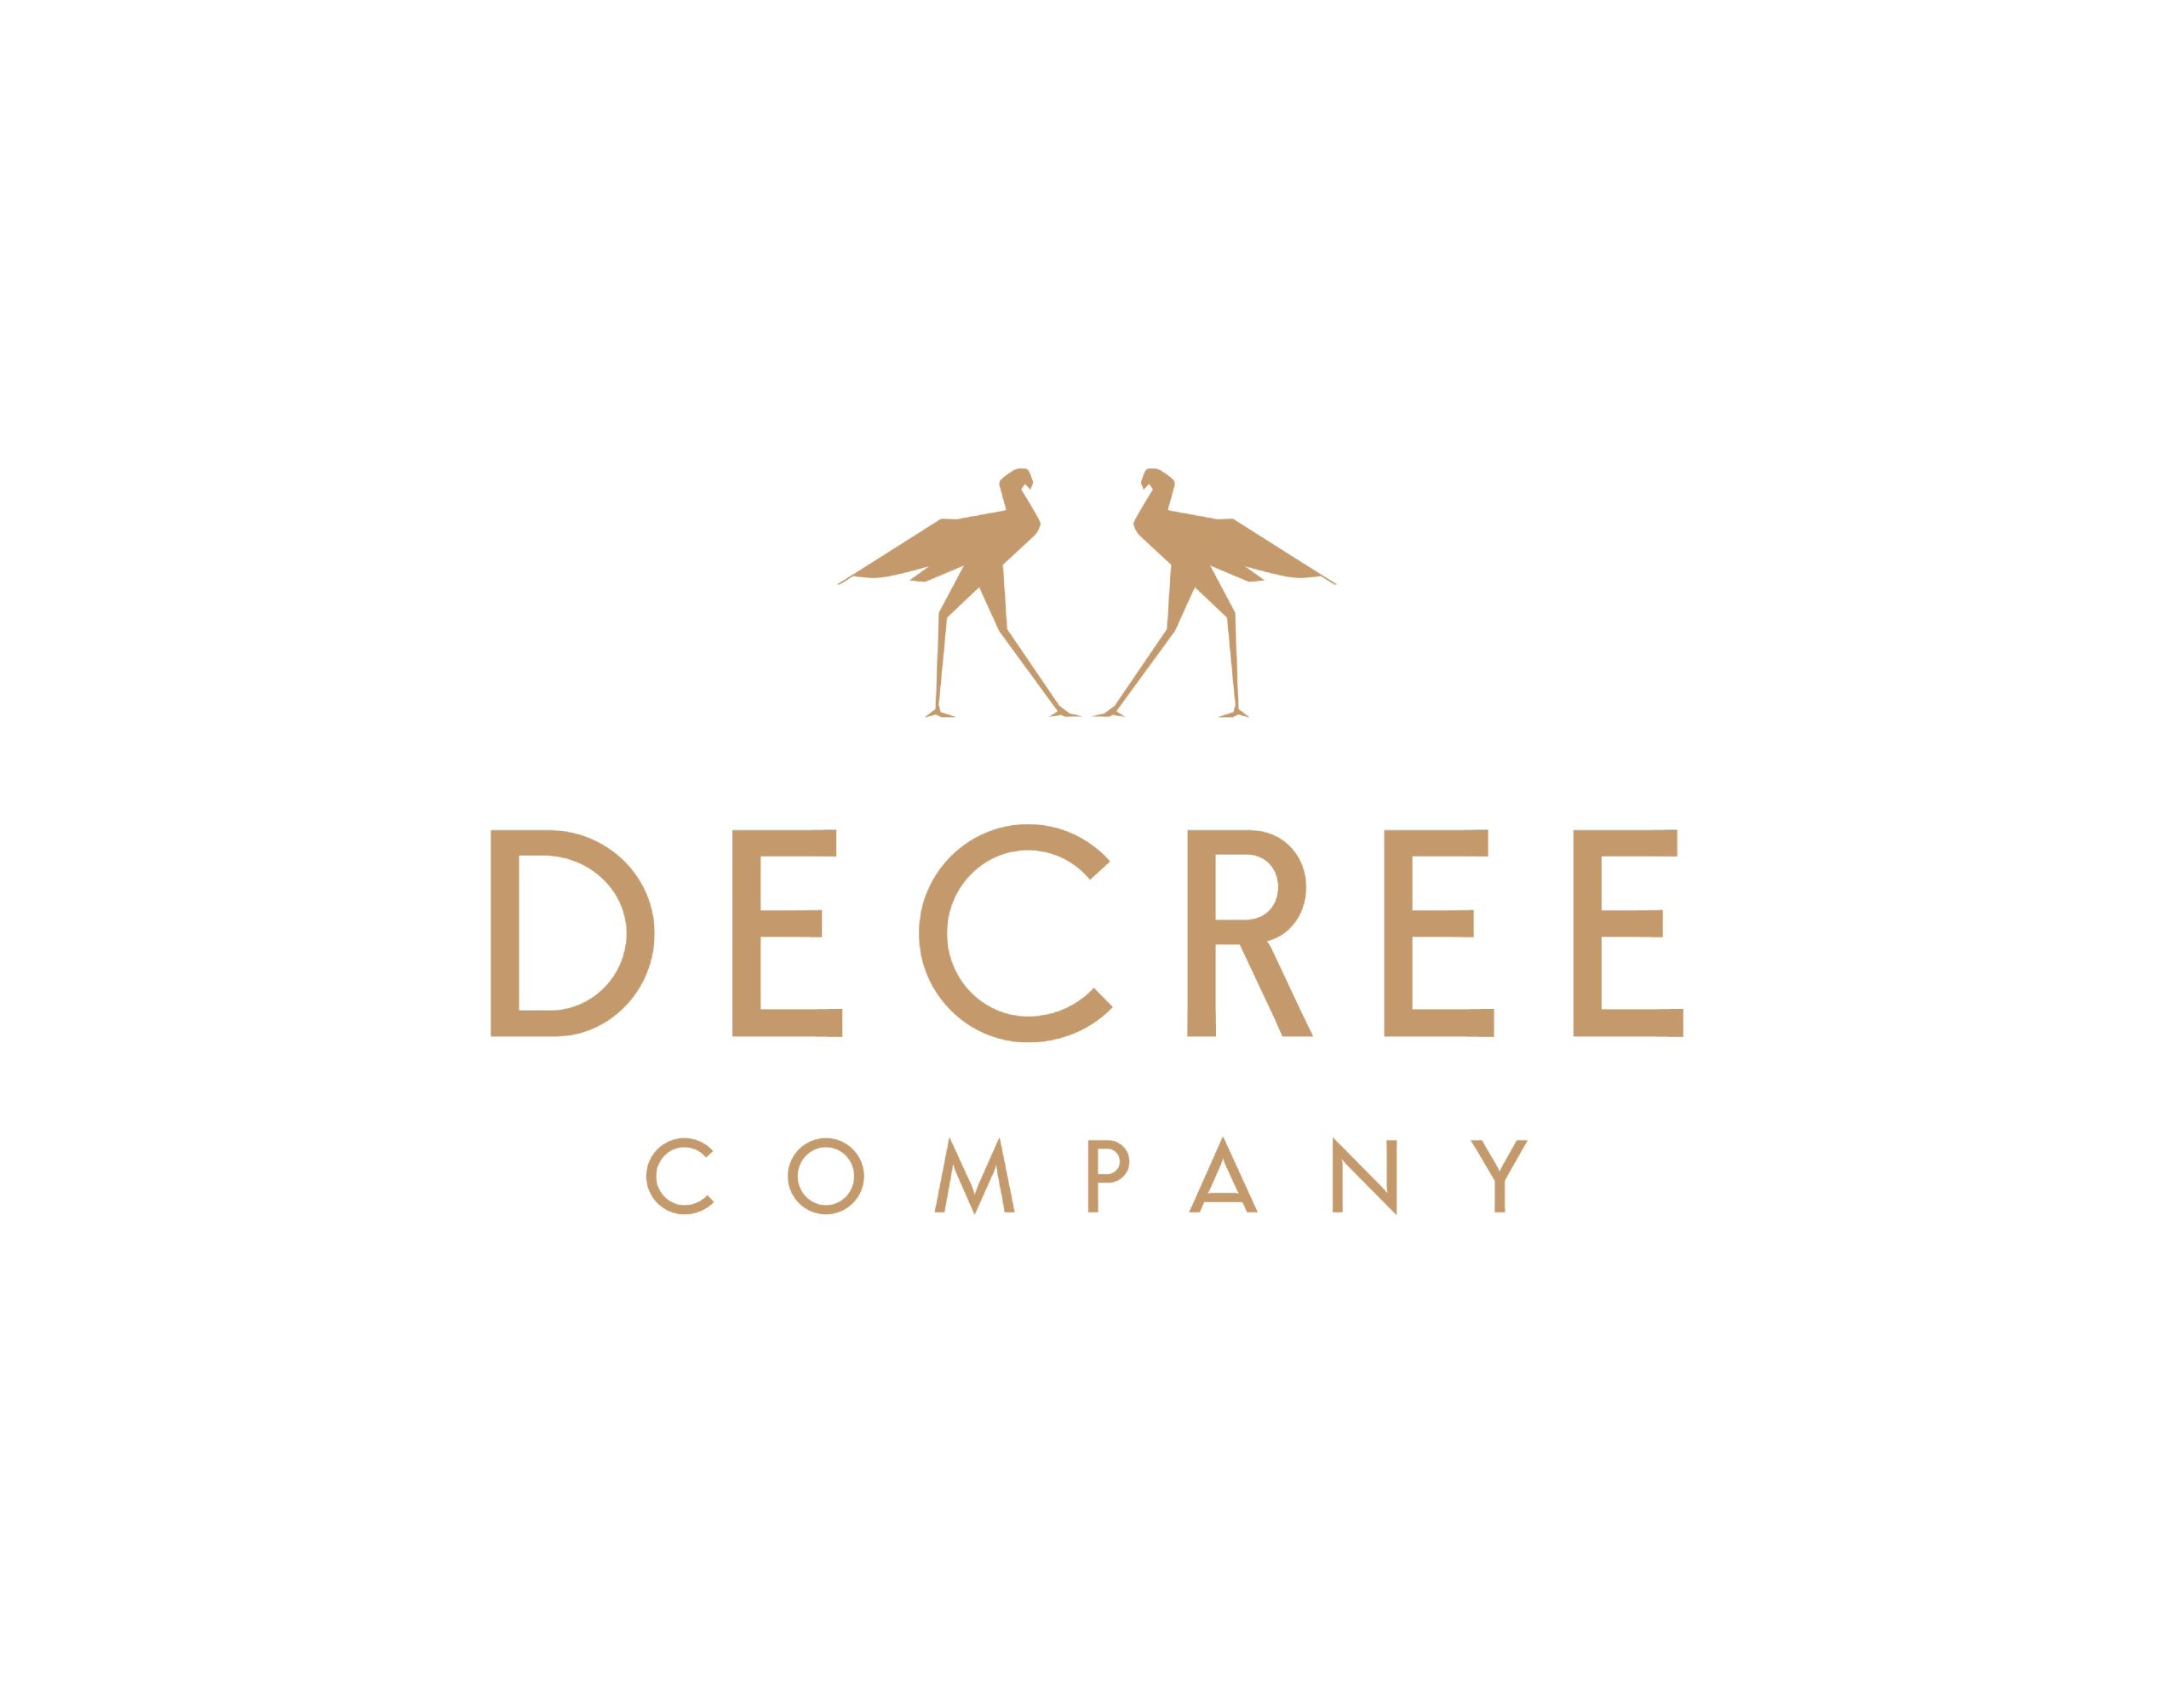 Decree Company